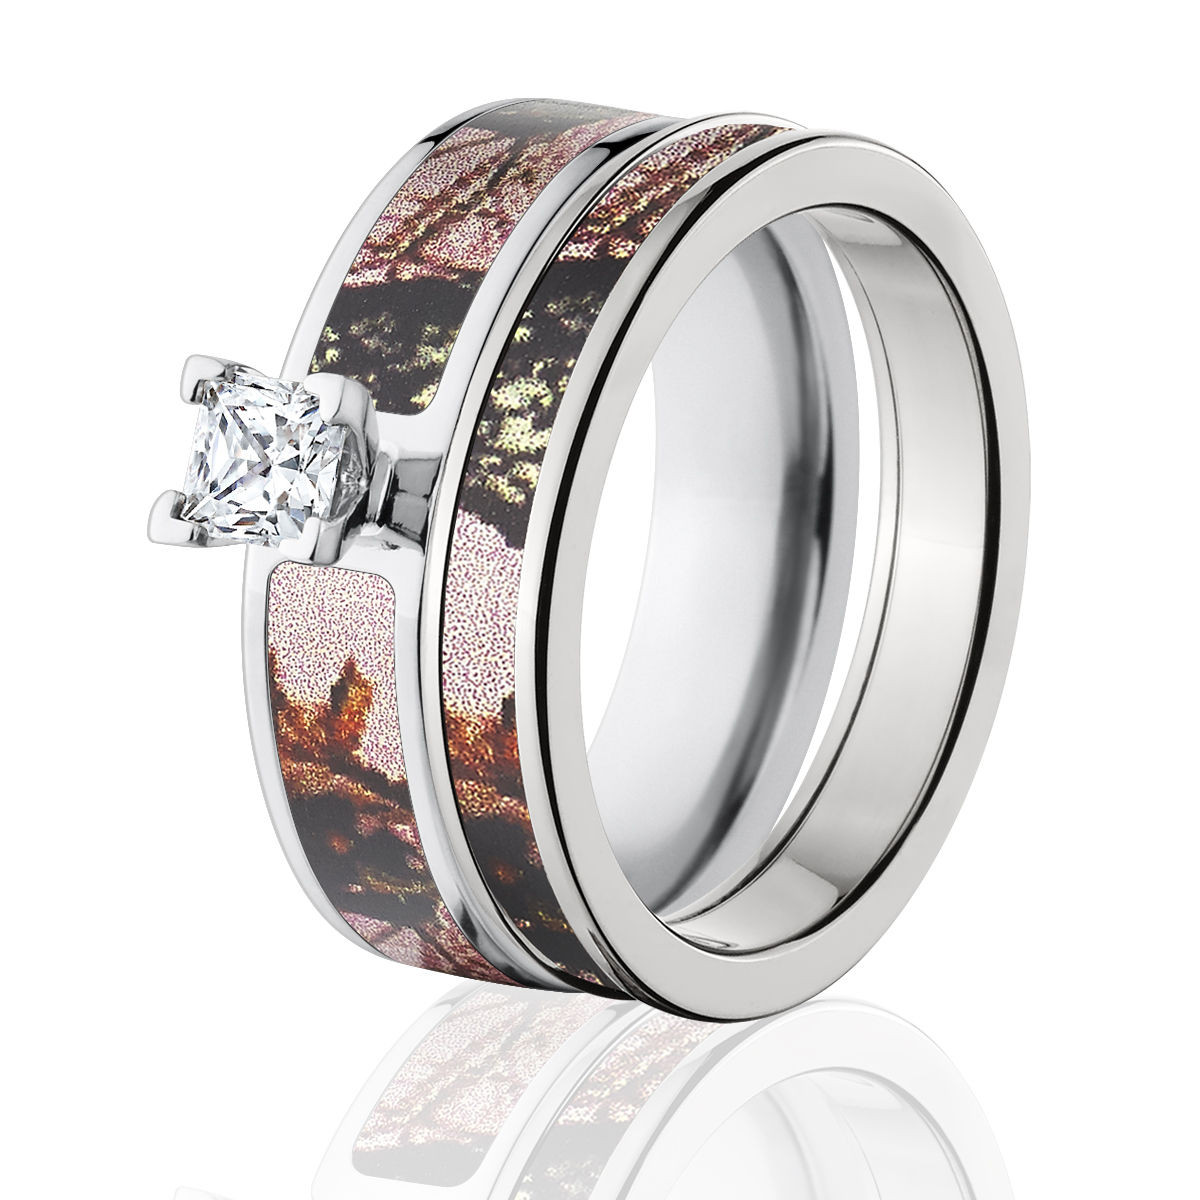 Pink Camo Wedding Ring Sets
 Mossy Oak Pink Break Up Camo Bridal Set Pink Camo Ring Sets